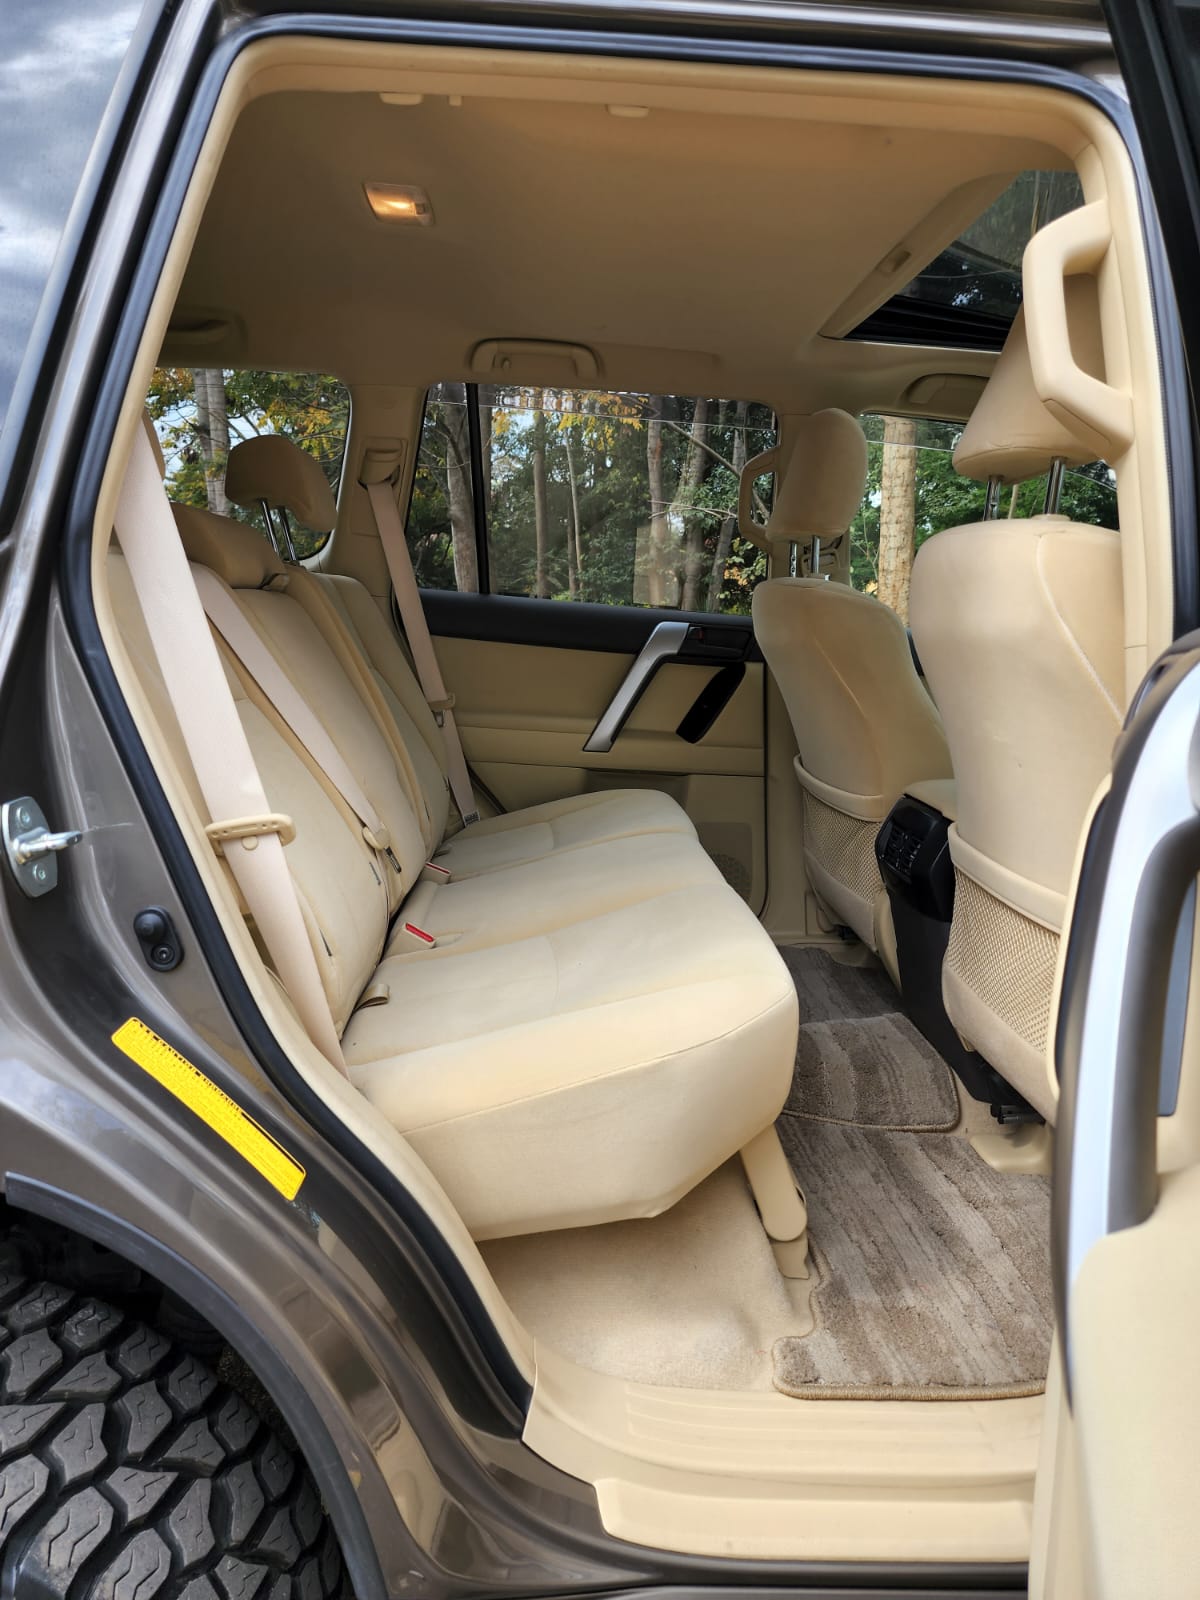 Diesel Toyota Prado 2016 Sunroof 7 seater Trade in OK